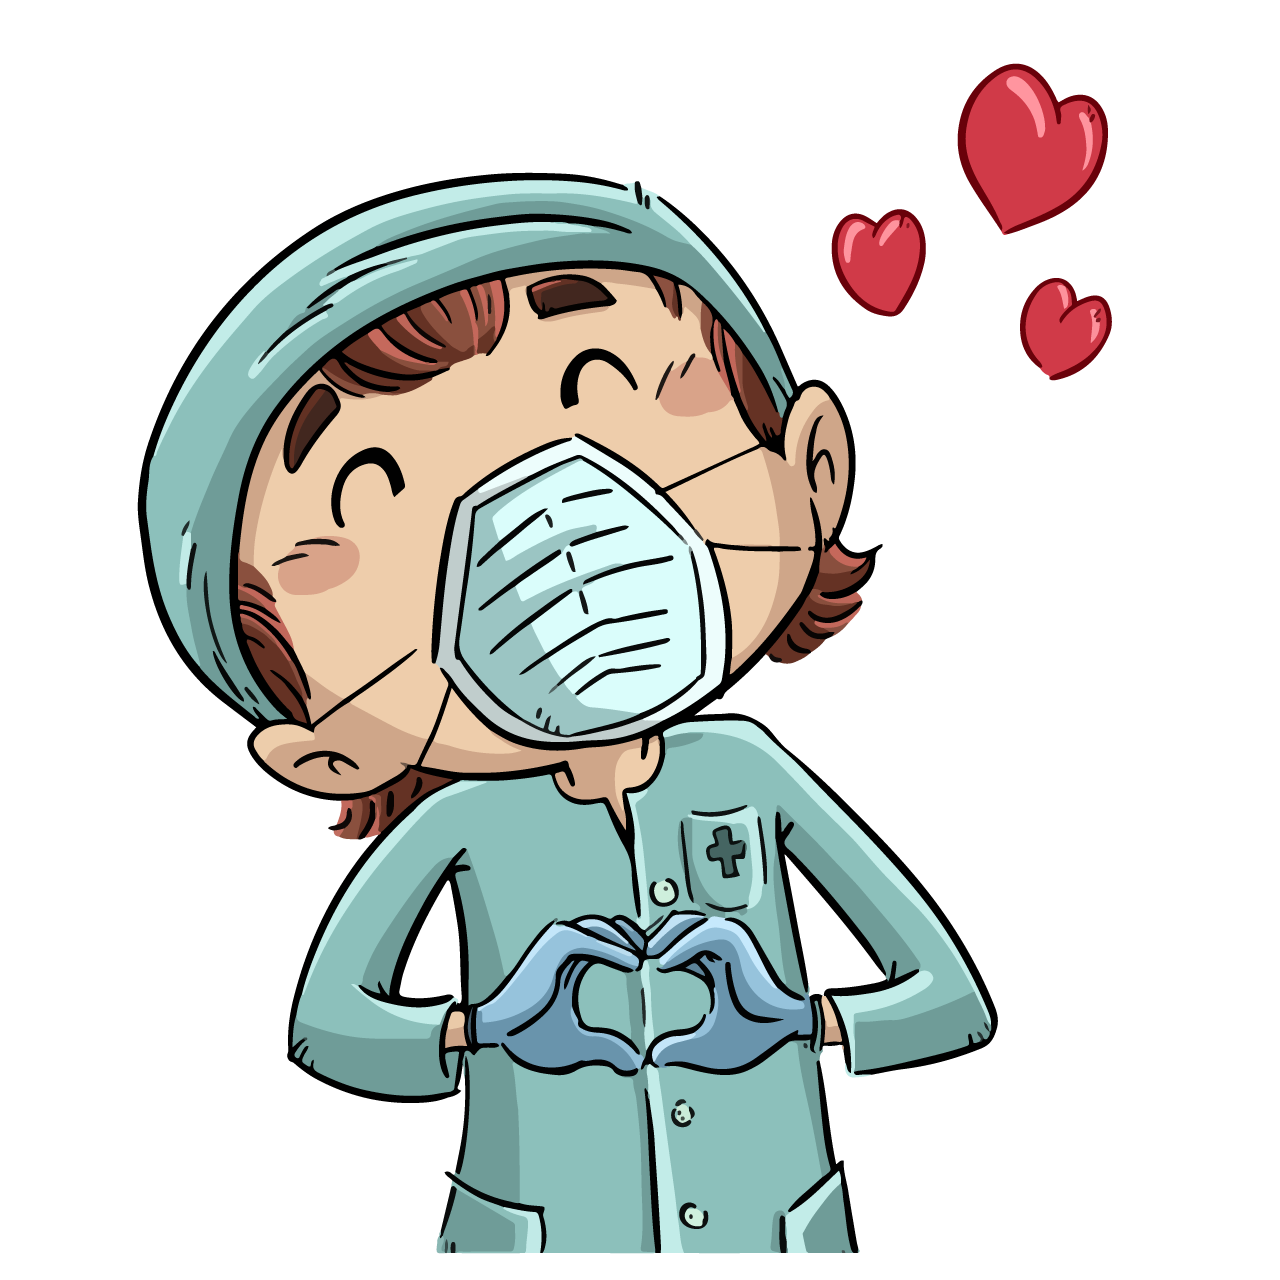 Nurse making heart with her hands cartoon illustration image